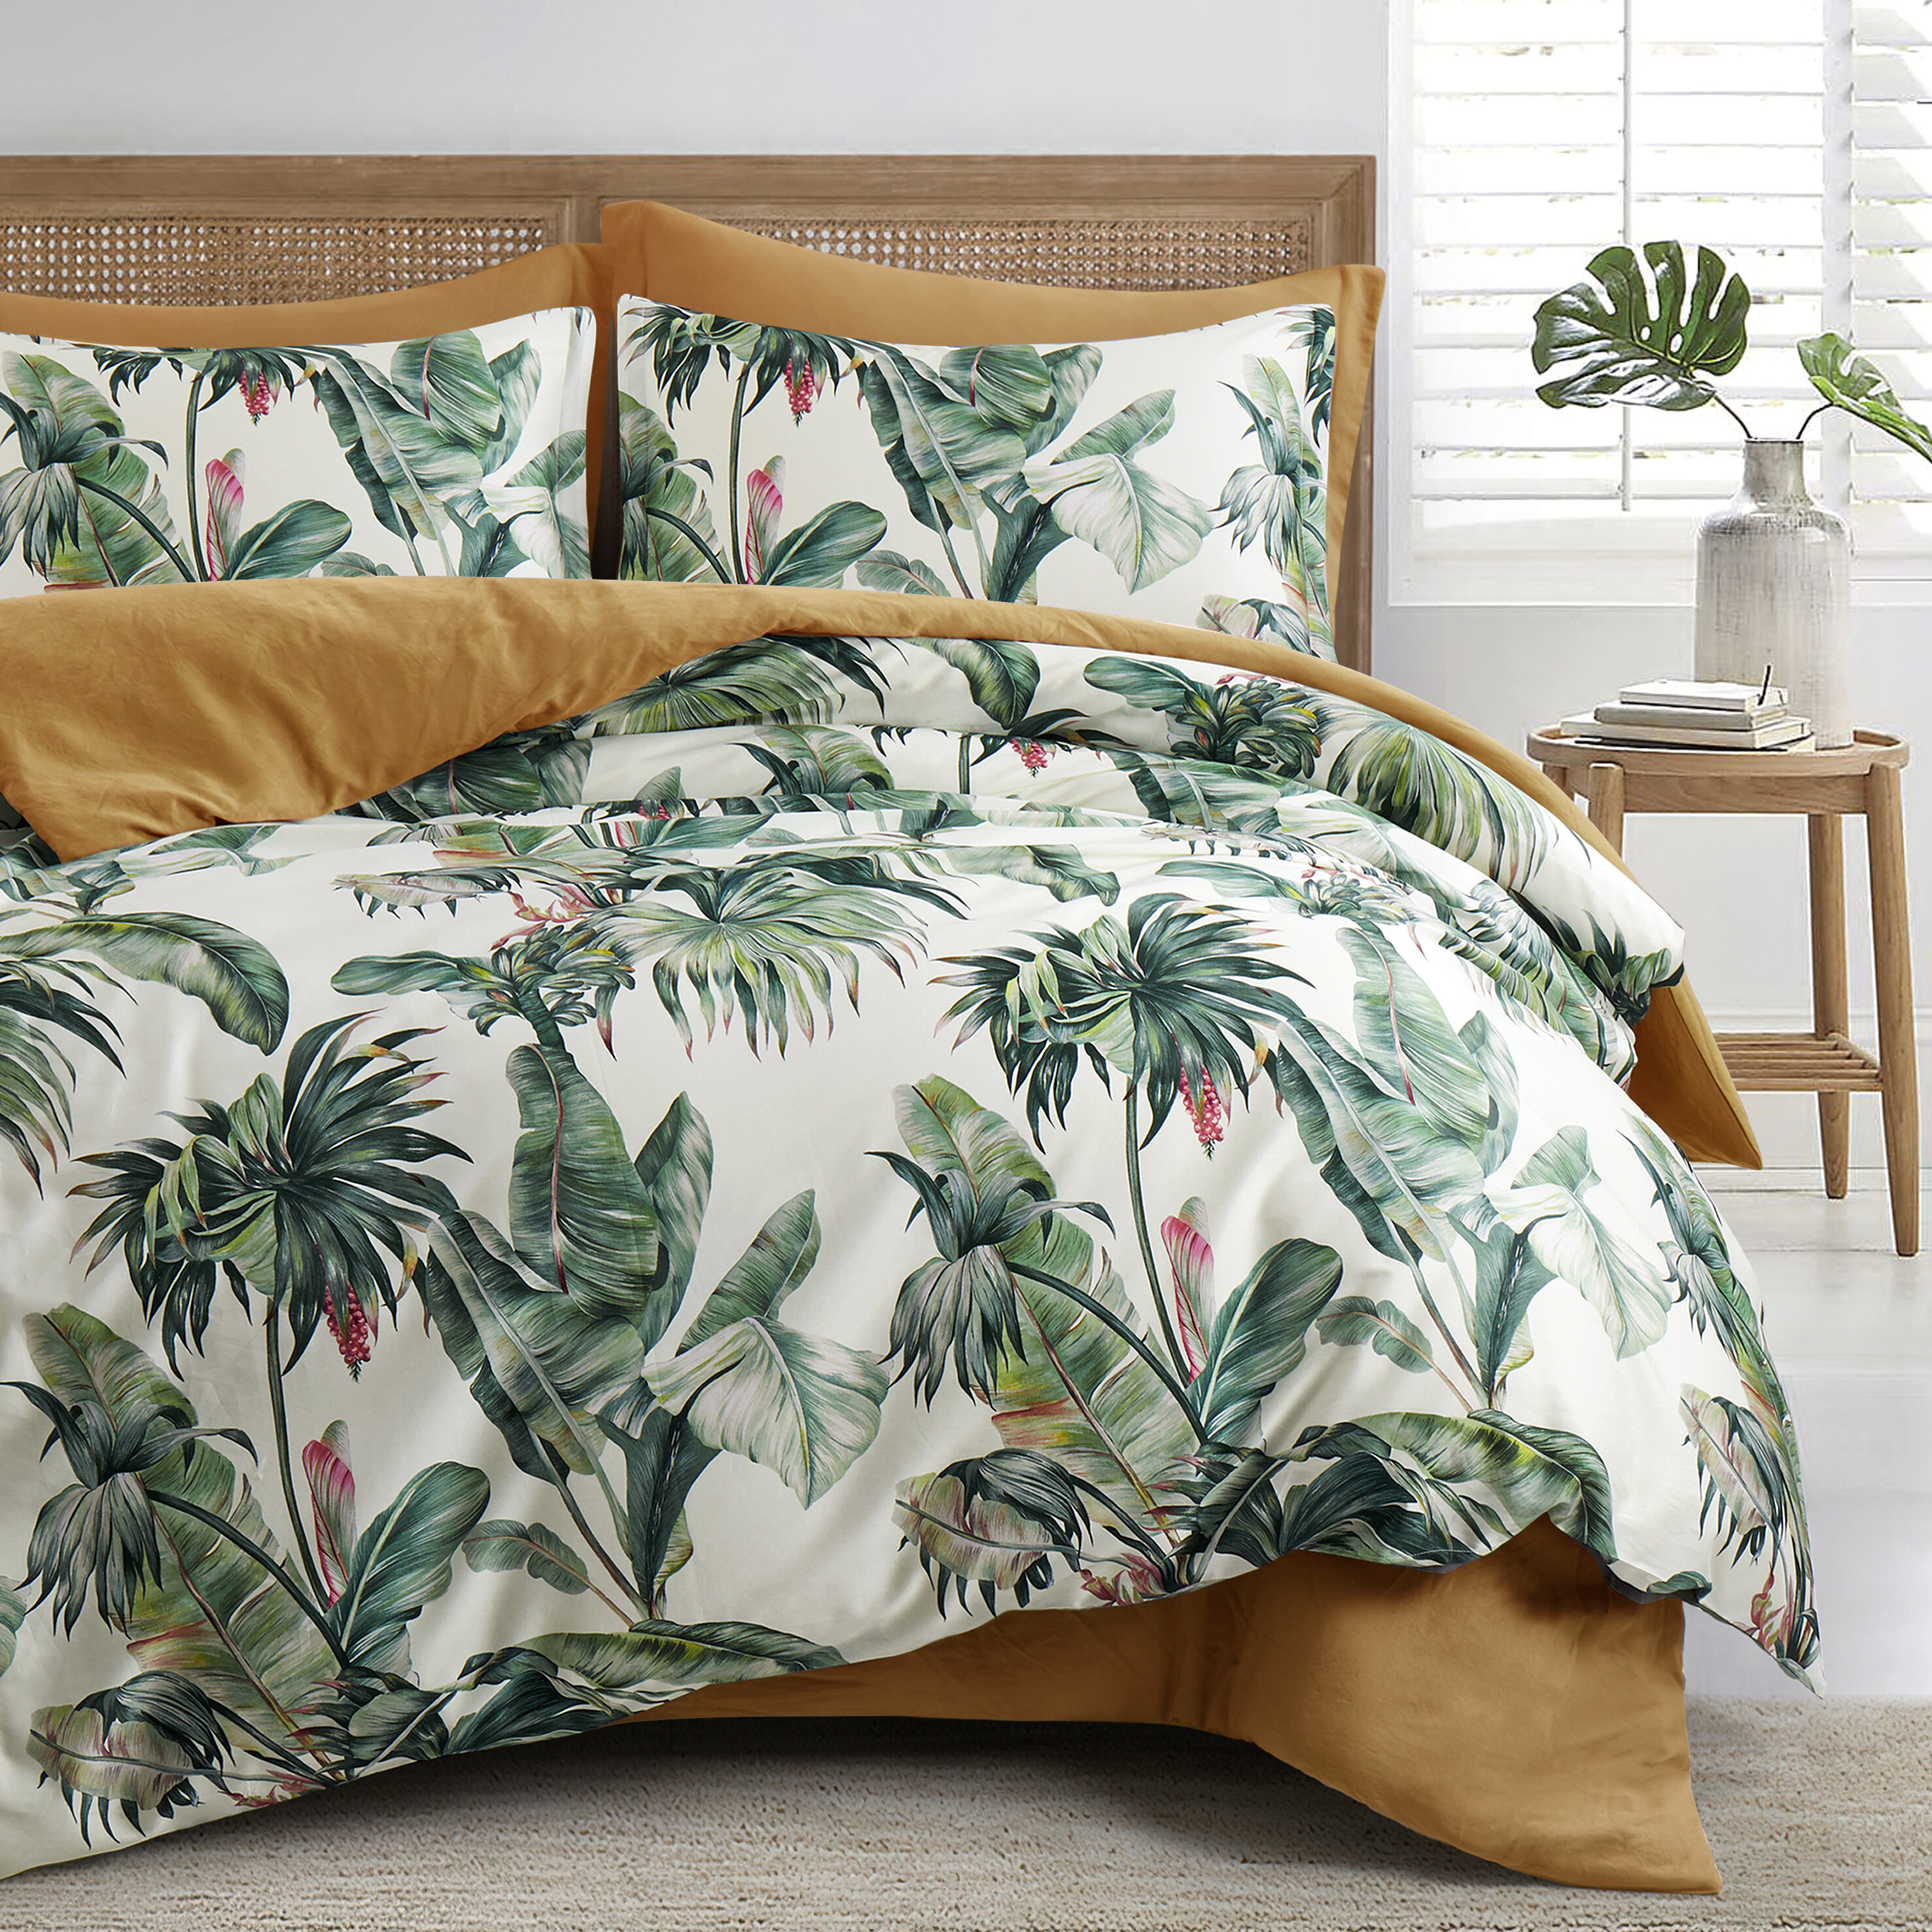 Duvet-Cover-Set Fern Floral 3-Piece Full / Queen Comforter Cover 100-Percent Cotton 300-Thread-Count